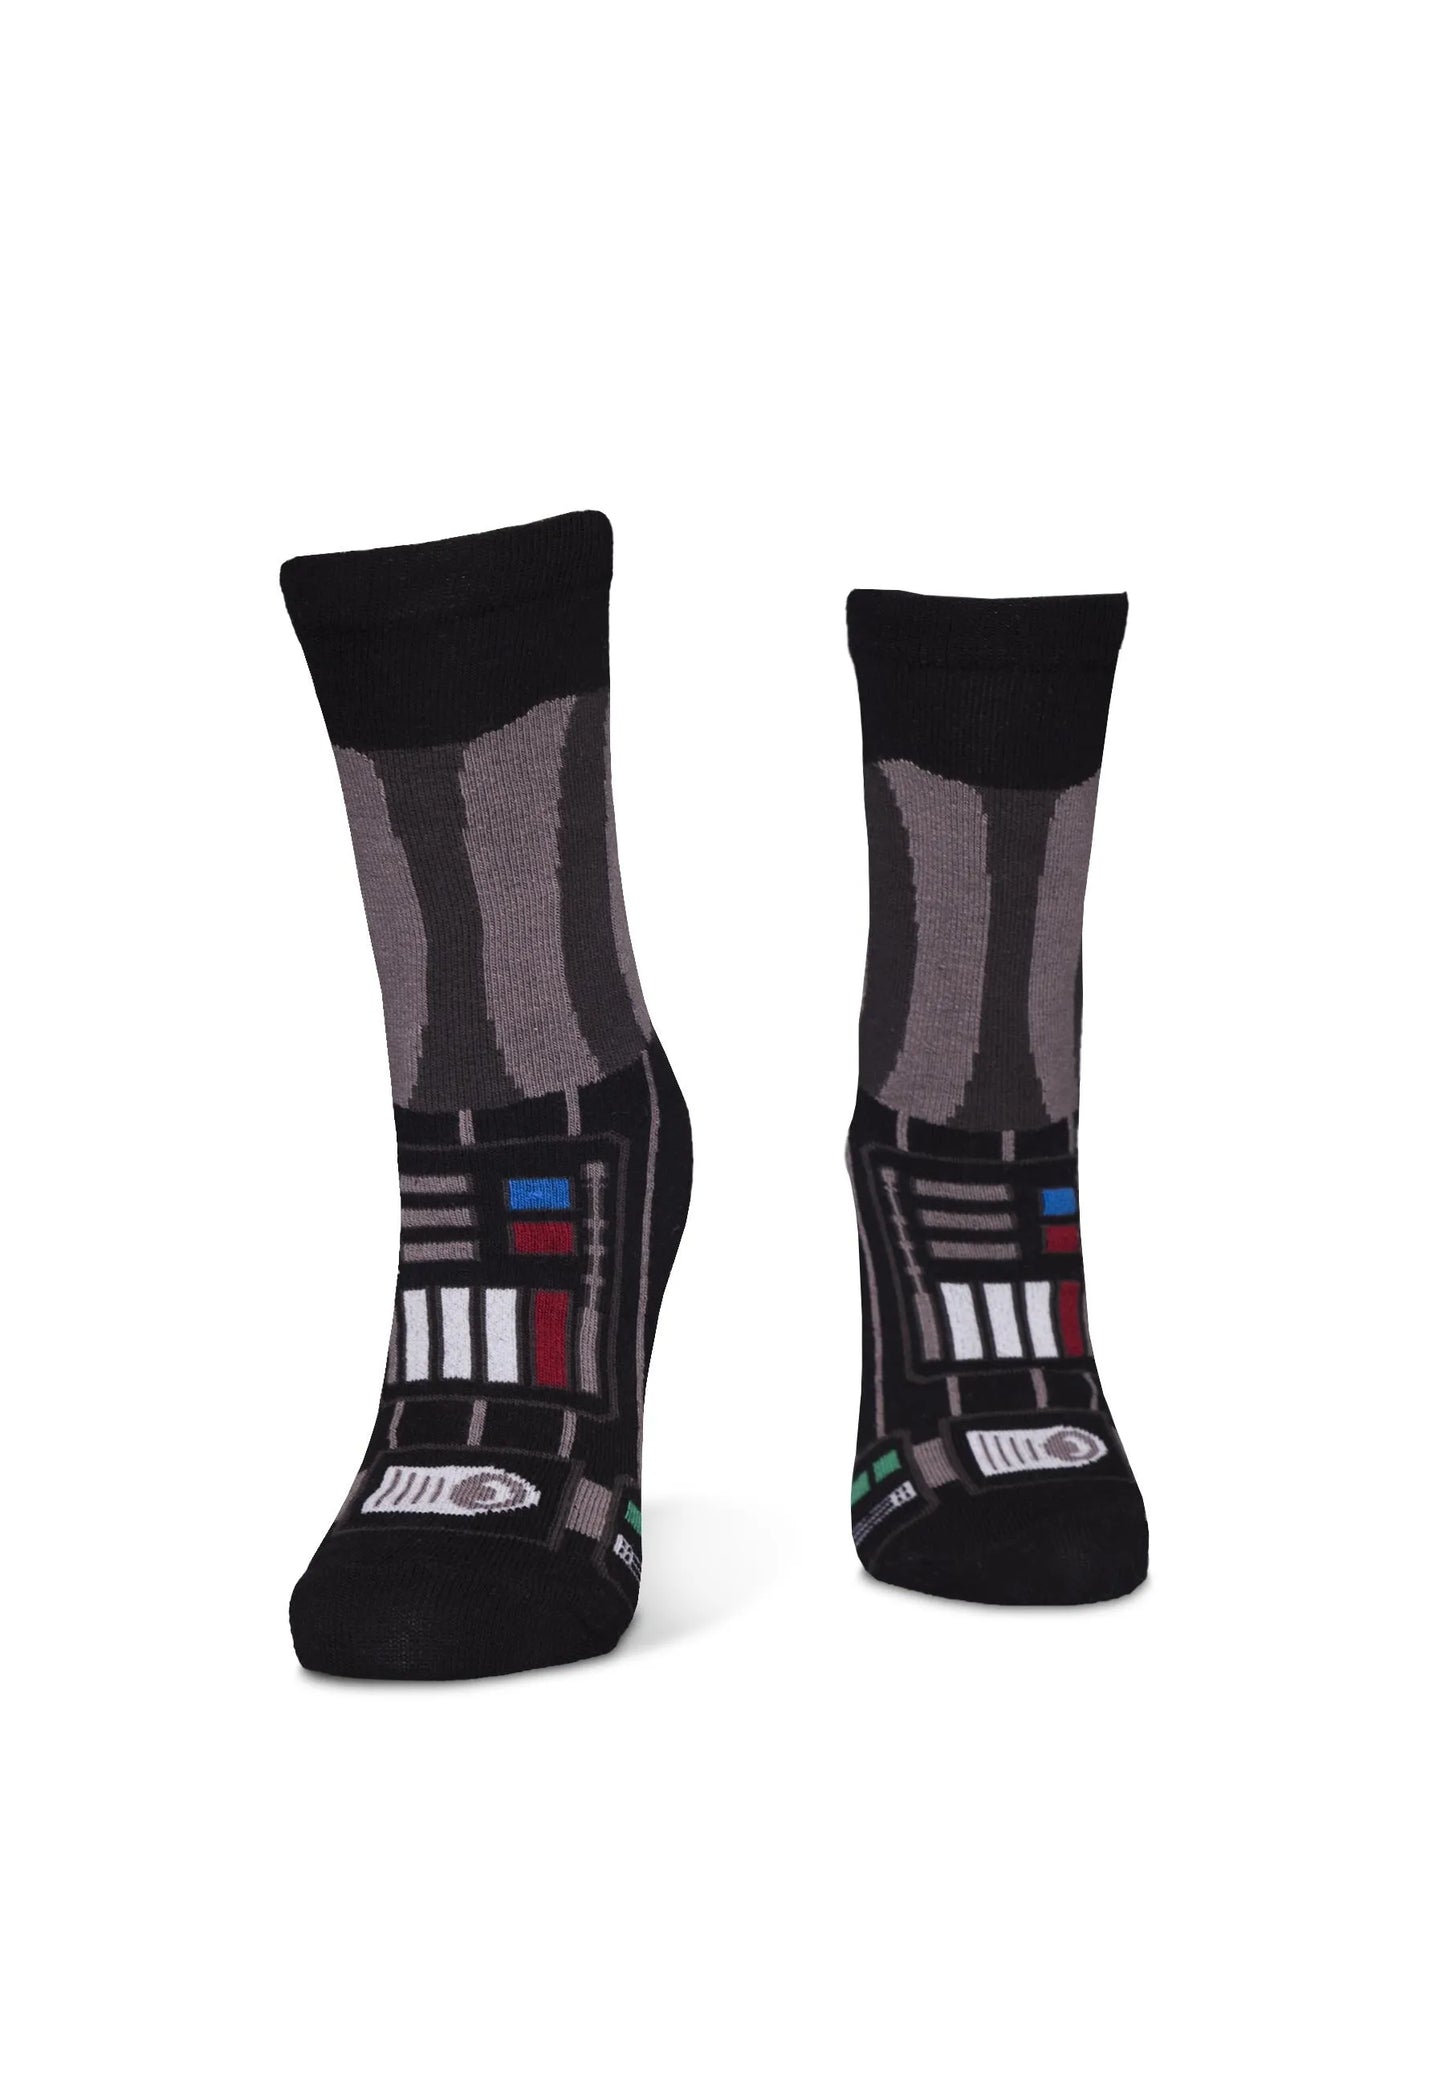 STAR WARS - Darth Vader Novelty Socks 1-Pack